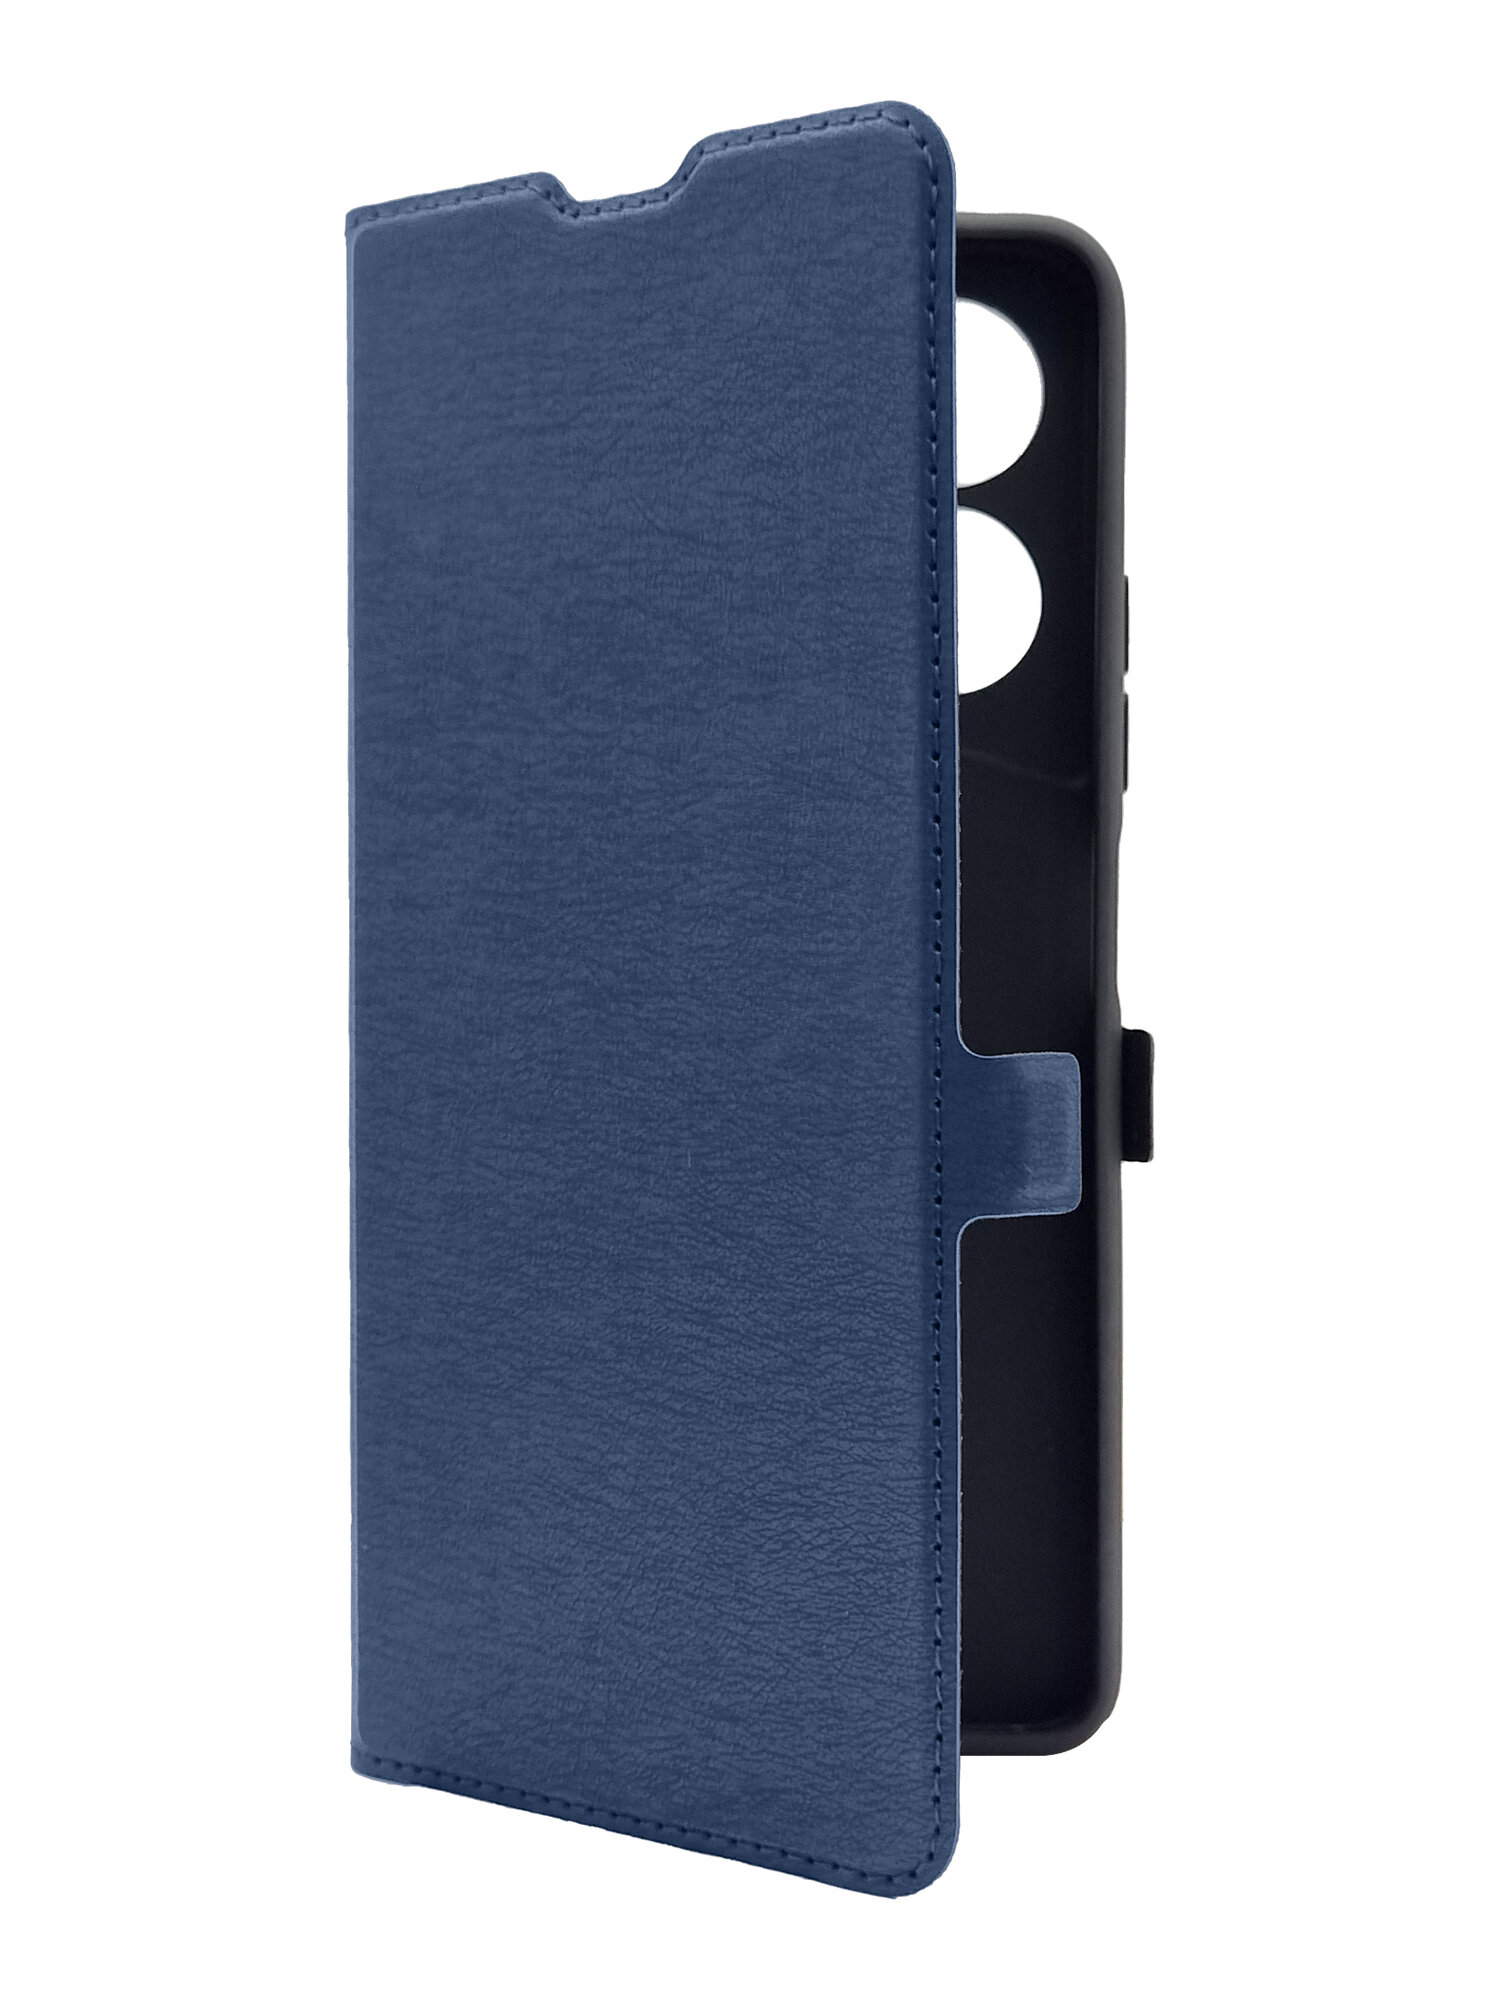 Чехол на Tecno Pova Neo 3 (Техно Пова Нео 3) синий книжка эко-кожа с функцией подставки отделением для пластиковых карт и магнитами Book case Brozo